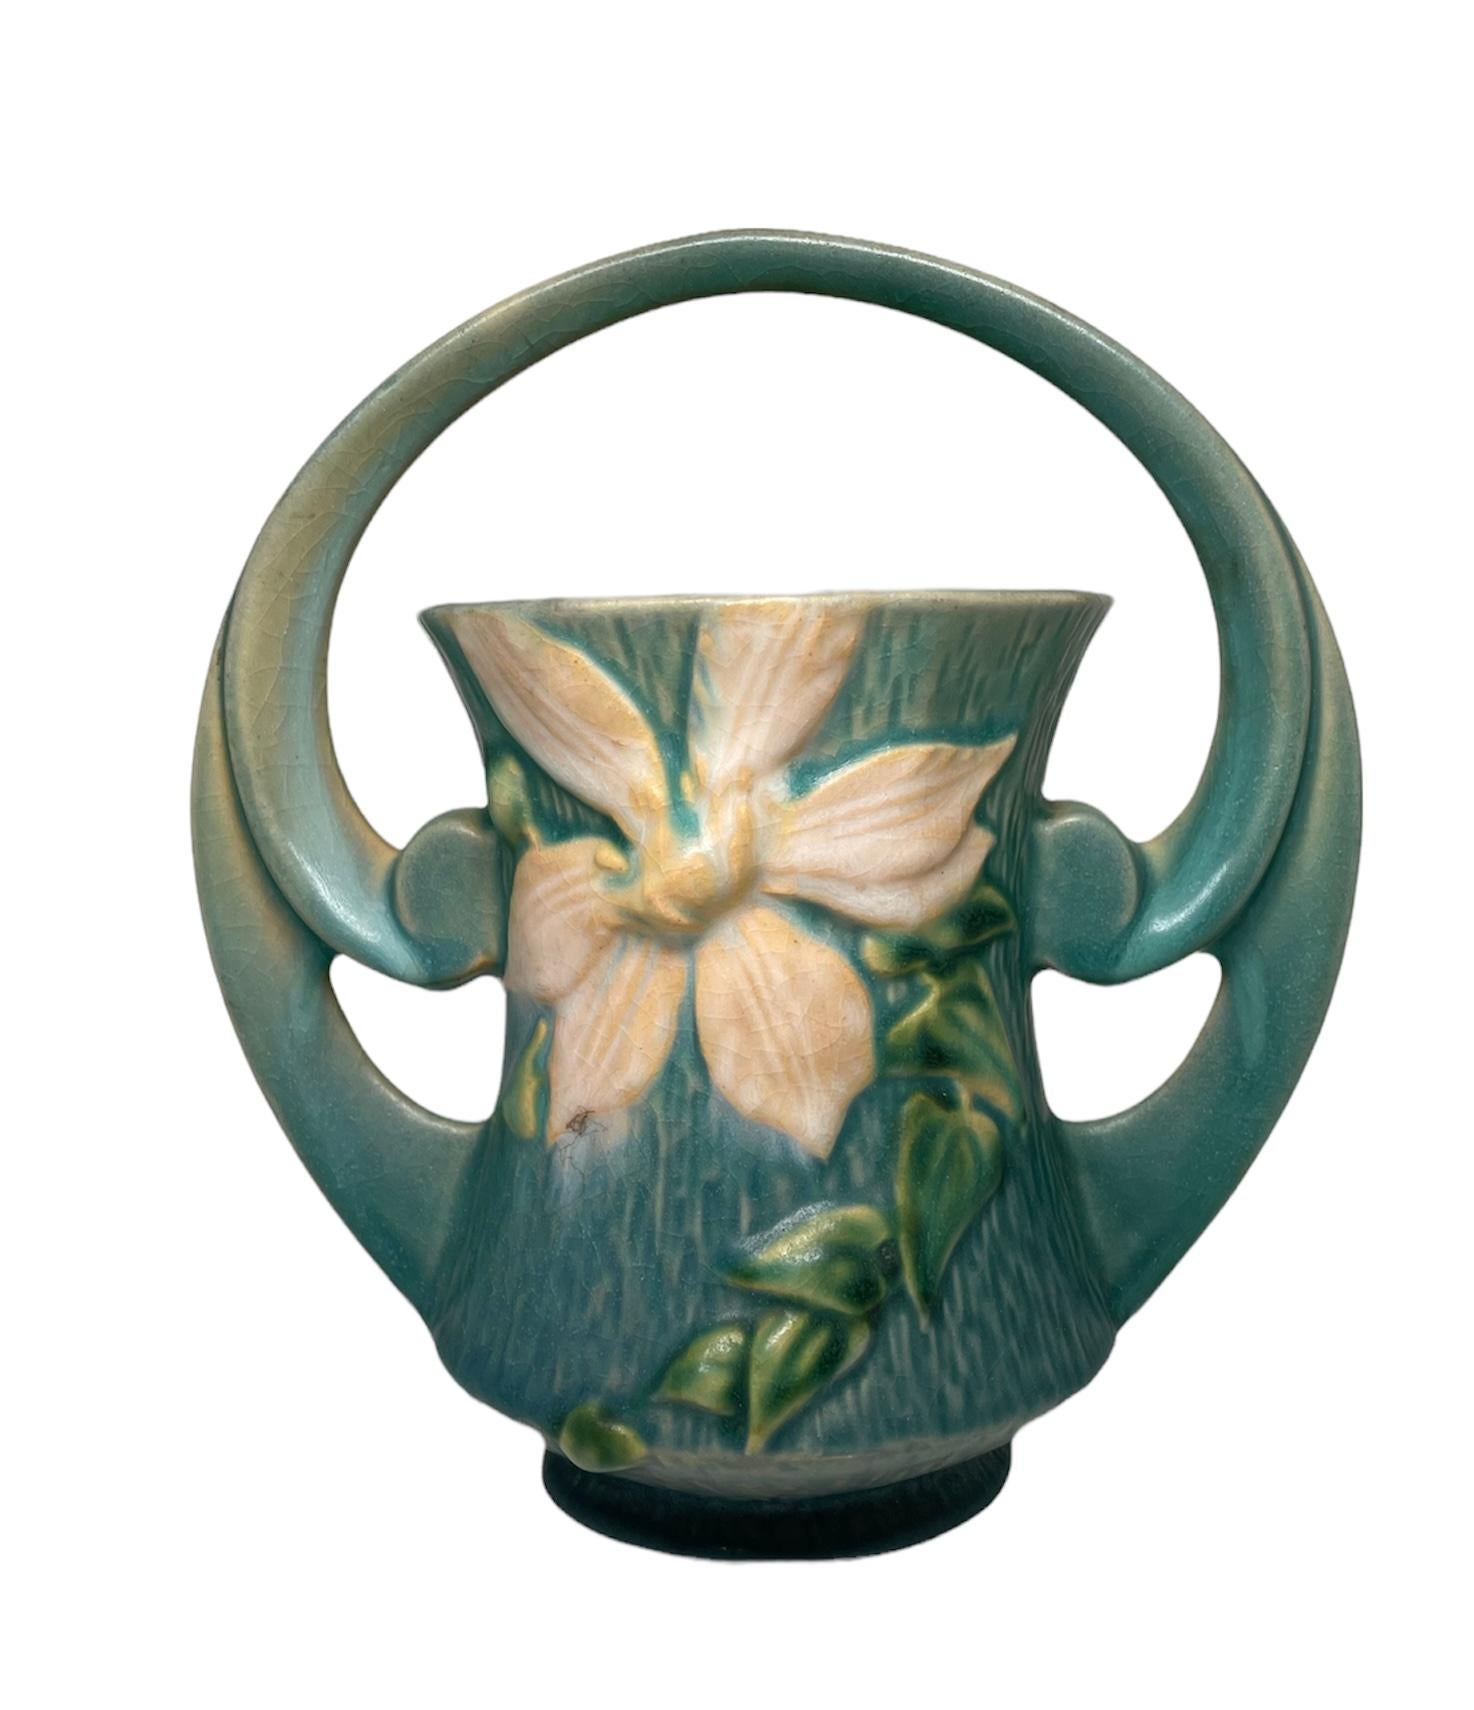 Molded Roseville Pottery Art Clematis Flower Pattern Basket